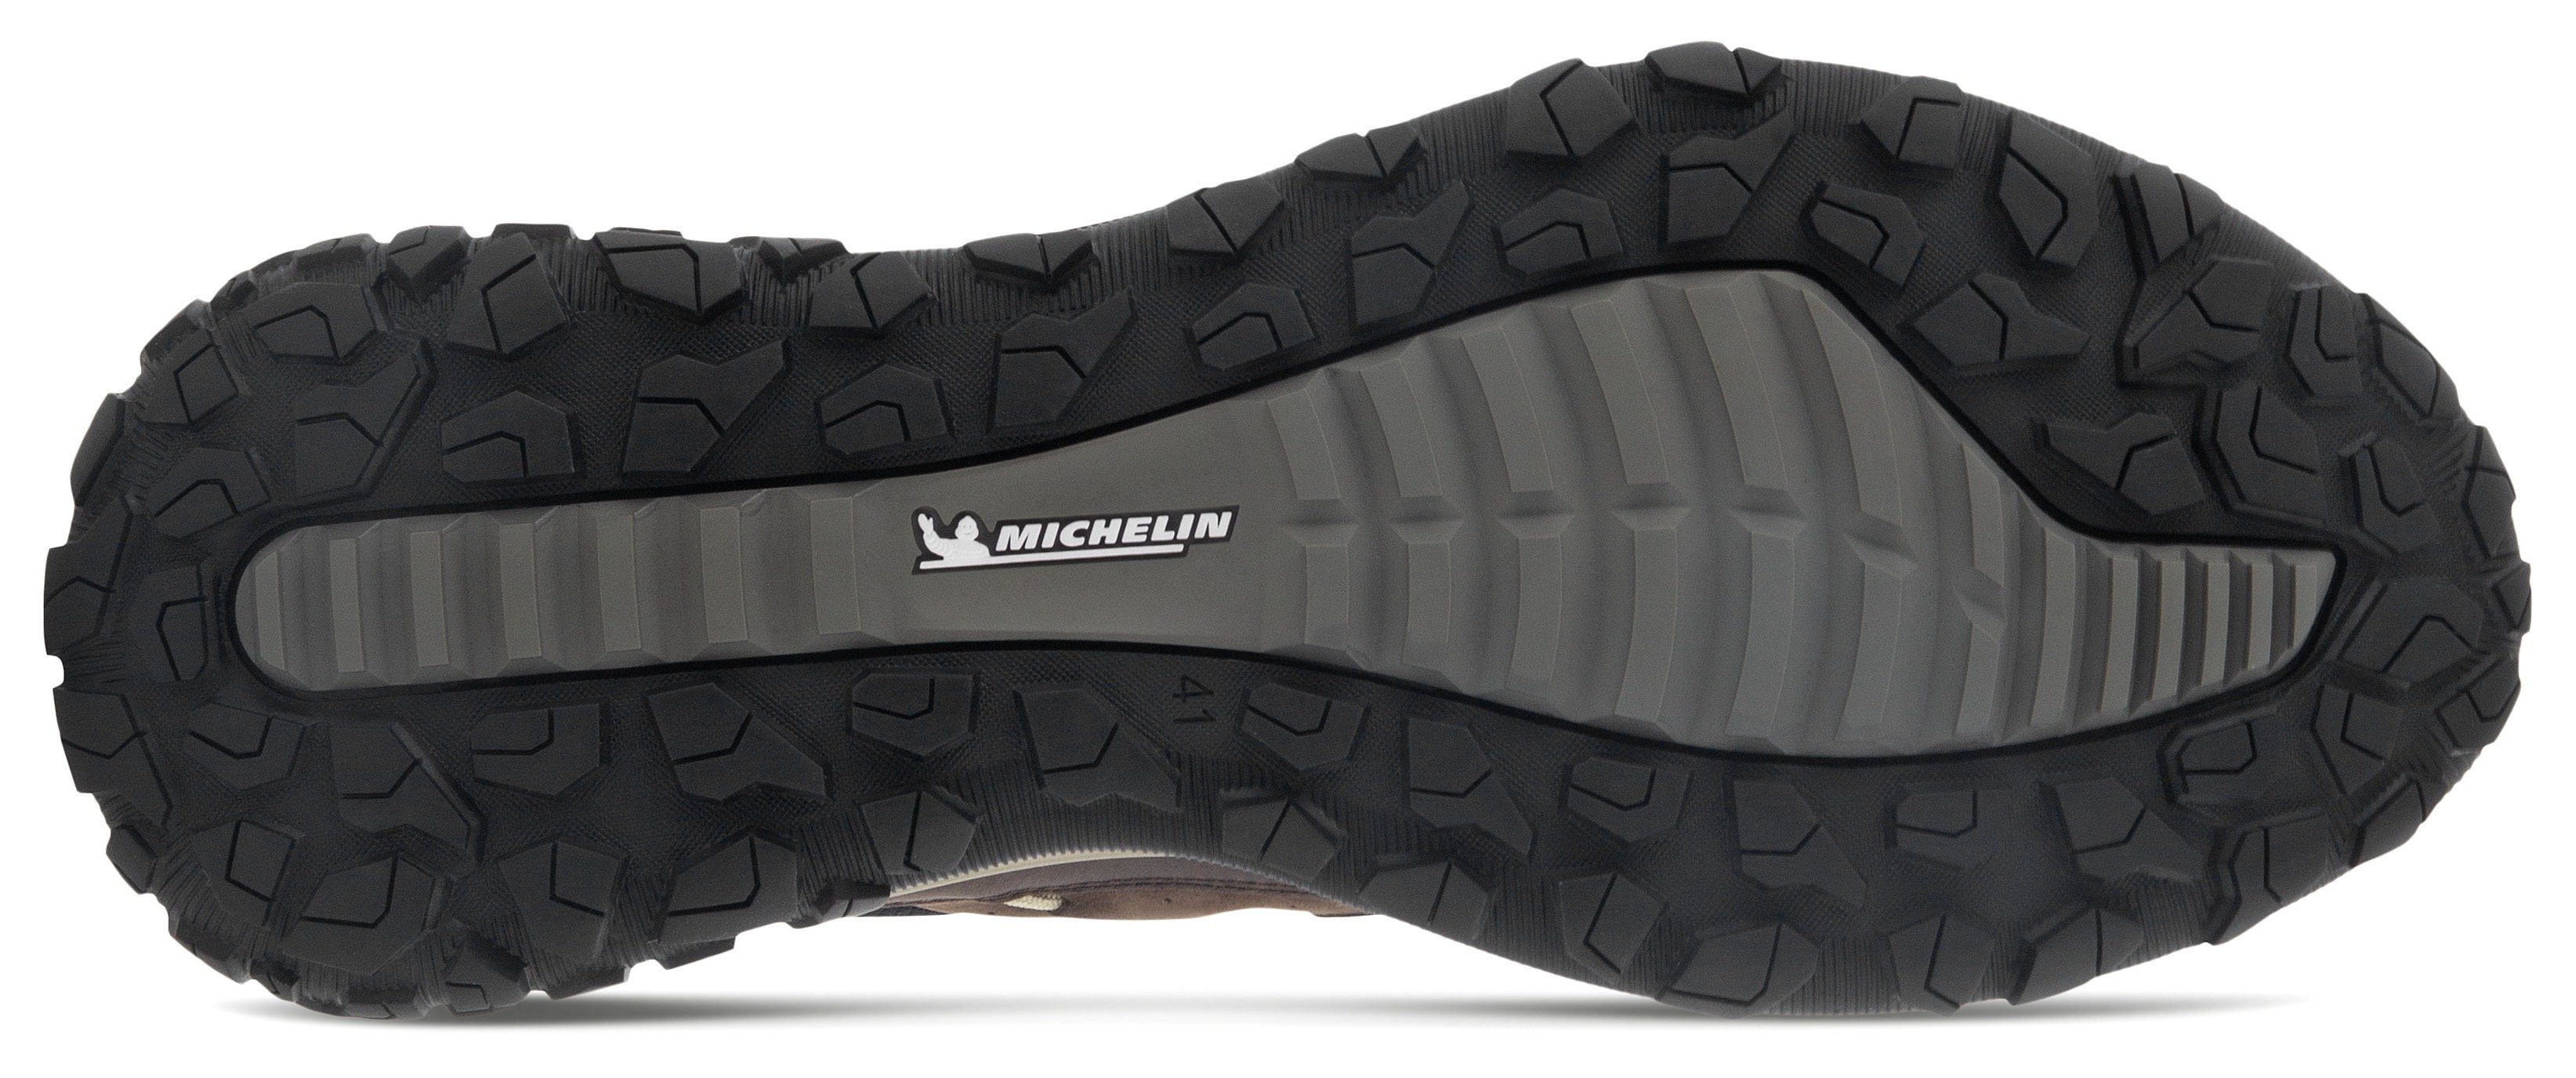 Ecco ULT-TRN Sneaker Michelin-Laufsohle mit profilierter dunkelbraun M